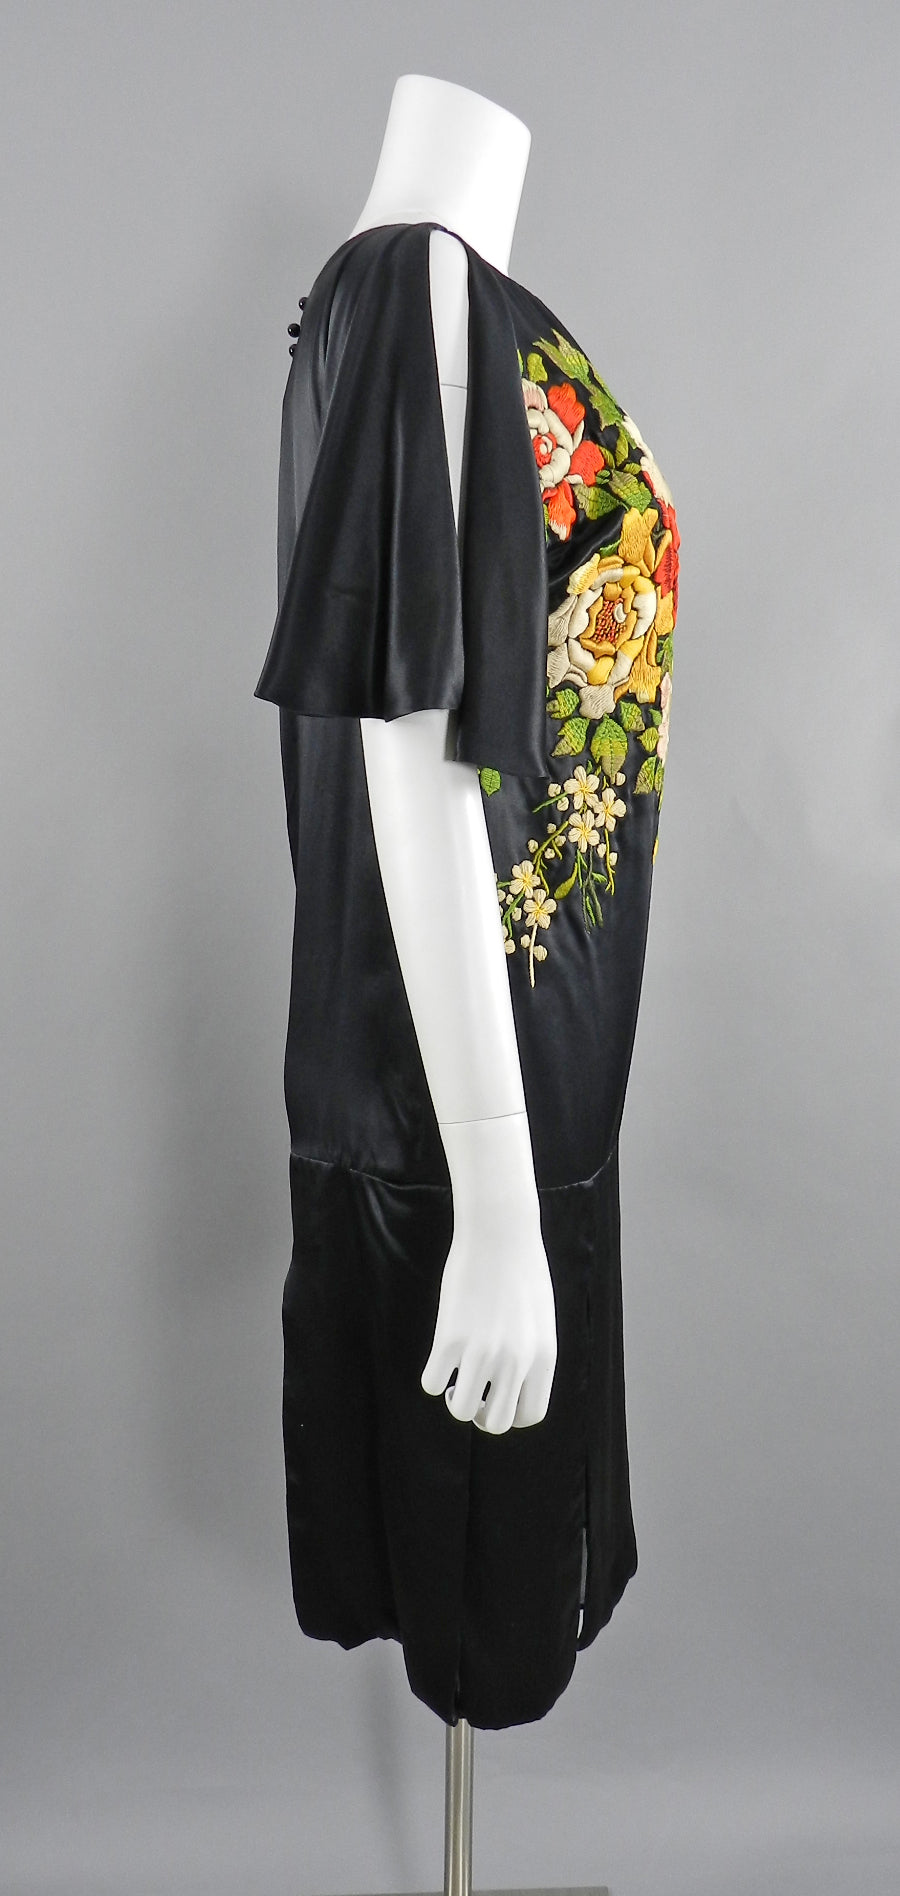 Antonio Marras Art Deco Runway Embroidered Silk Chinoiserie Dress